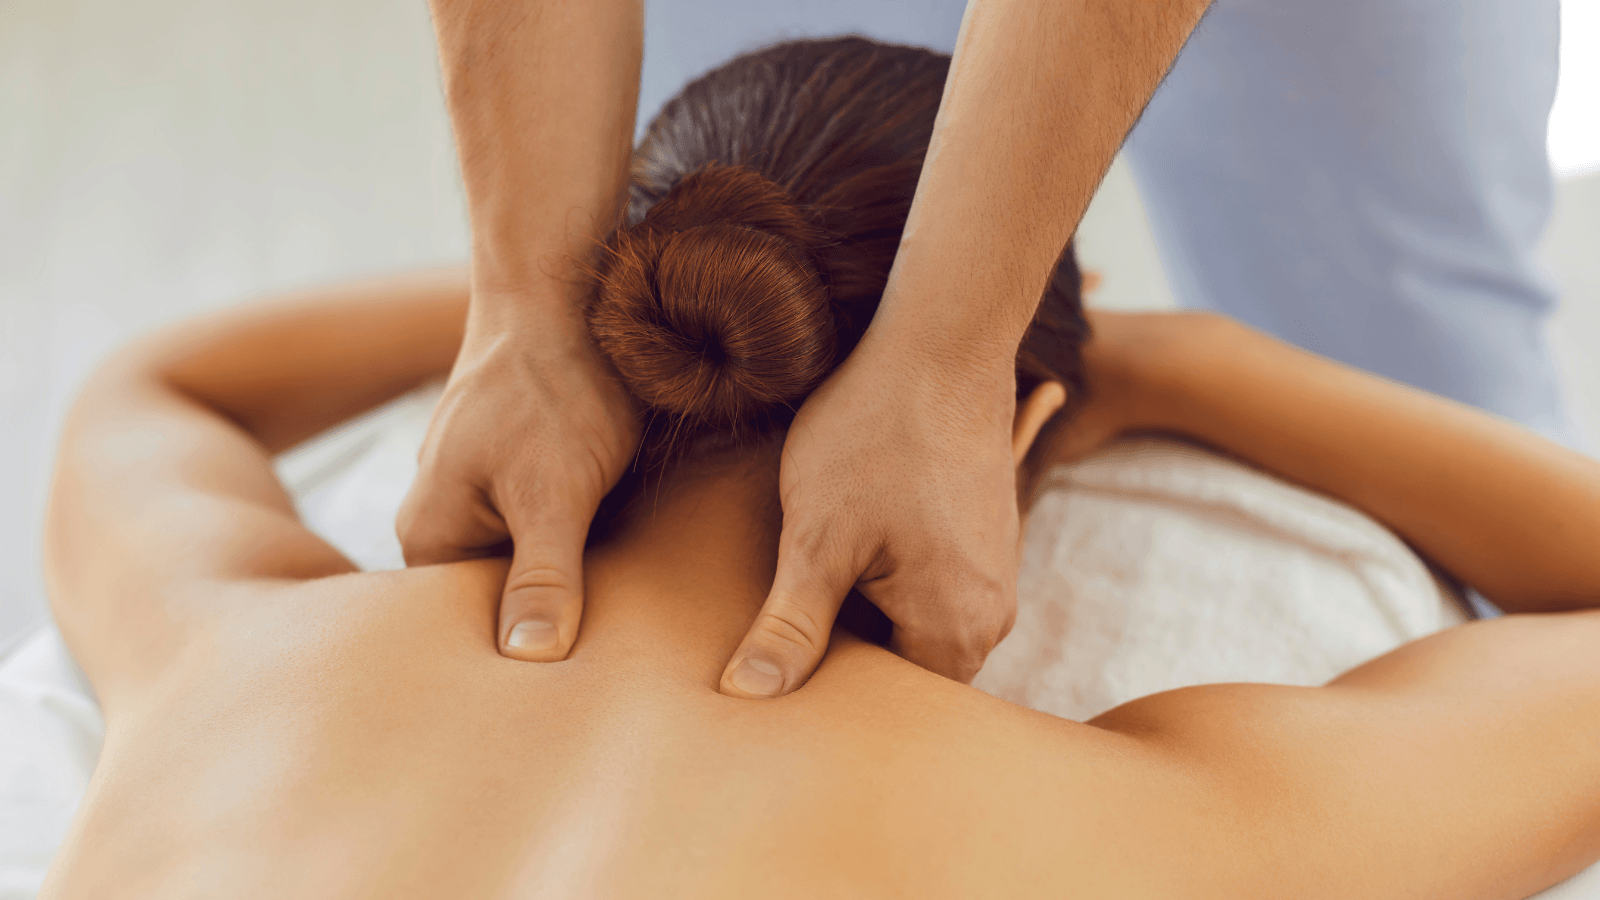 Certified Massage Therapist Giving Massage